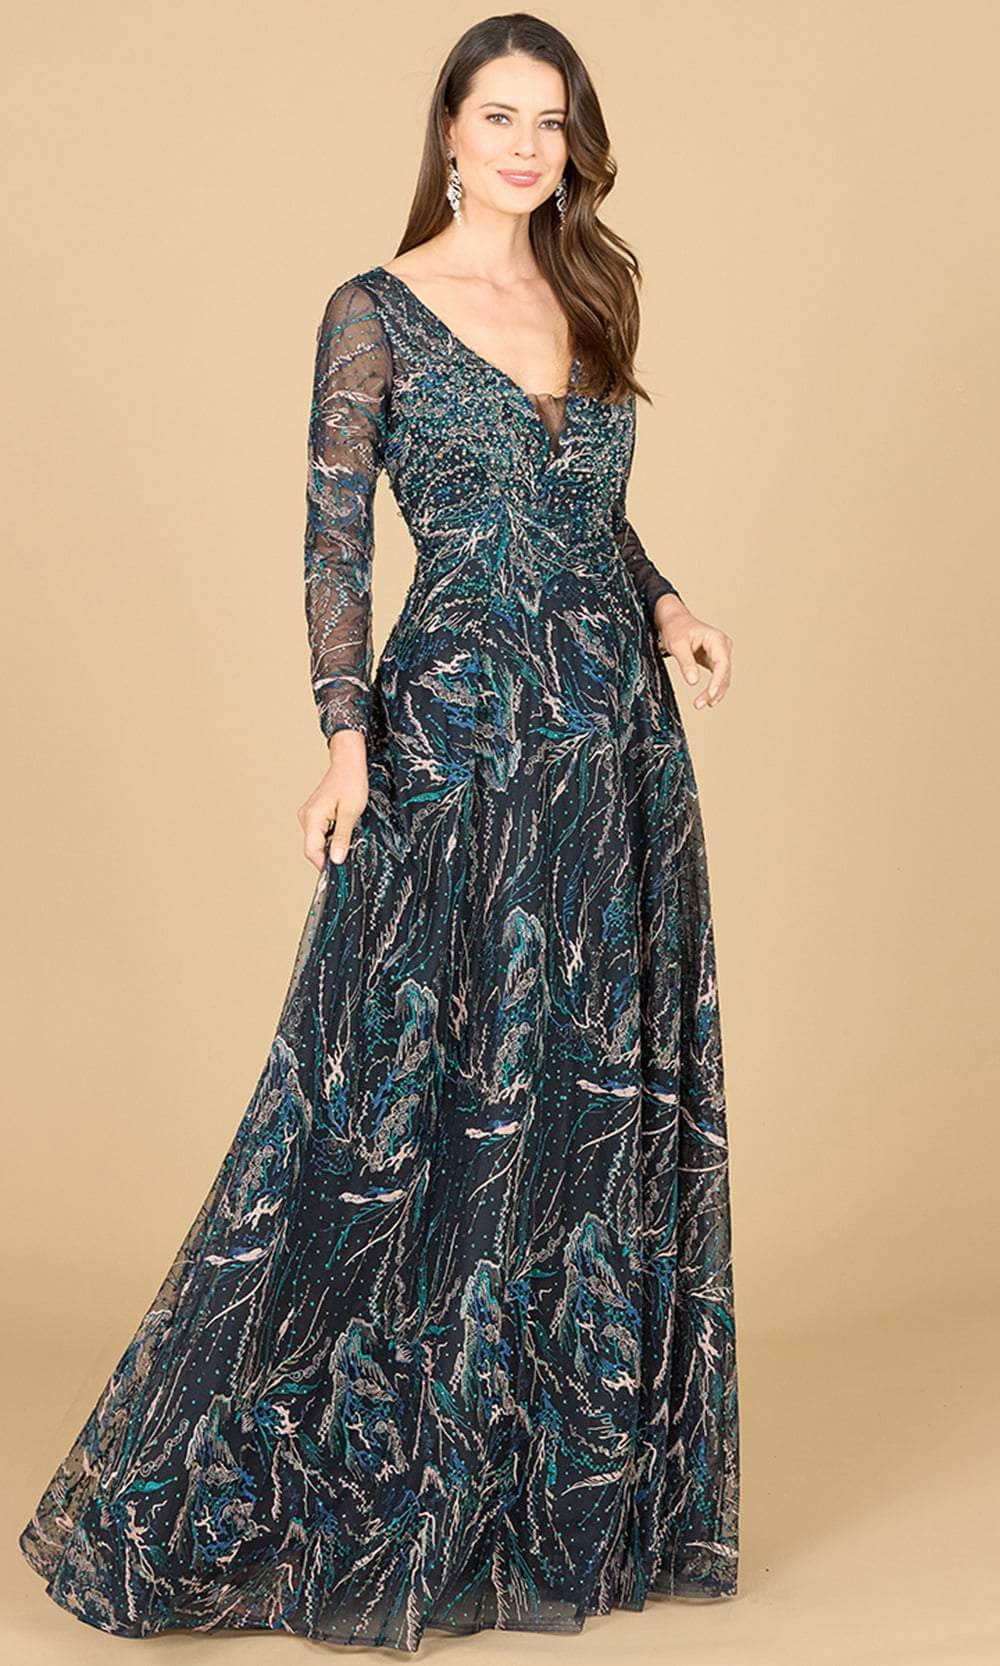 Lara Dresses 29153 - Sheer Long Sleeve Embroidered Ballgown
